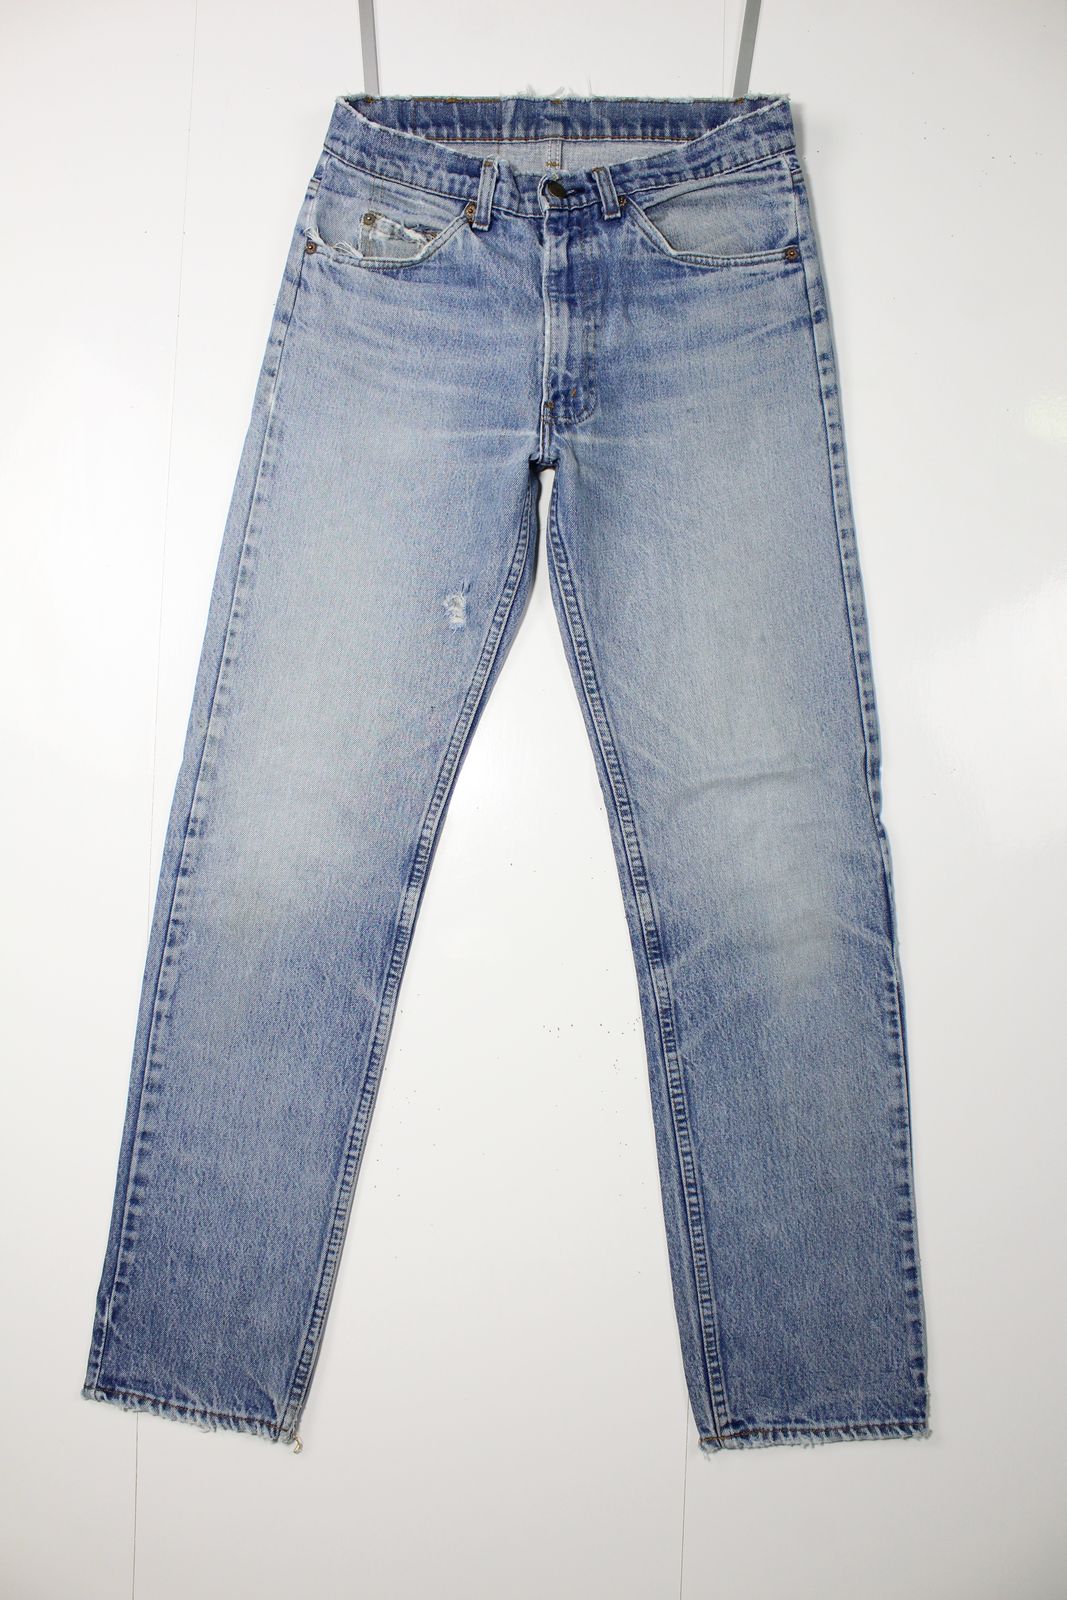 Levi's 505 Orange Tab Denim W32 L34 Made In USA Jeans Vintage